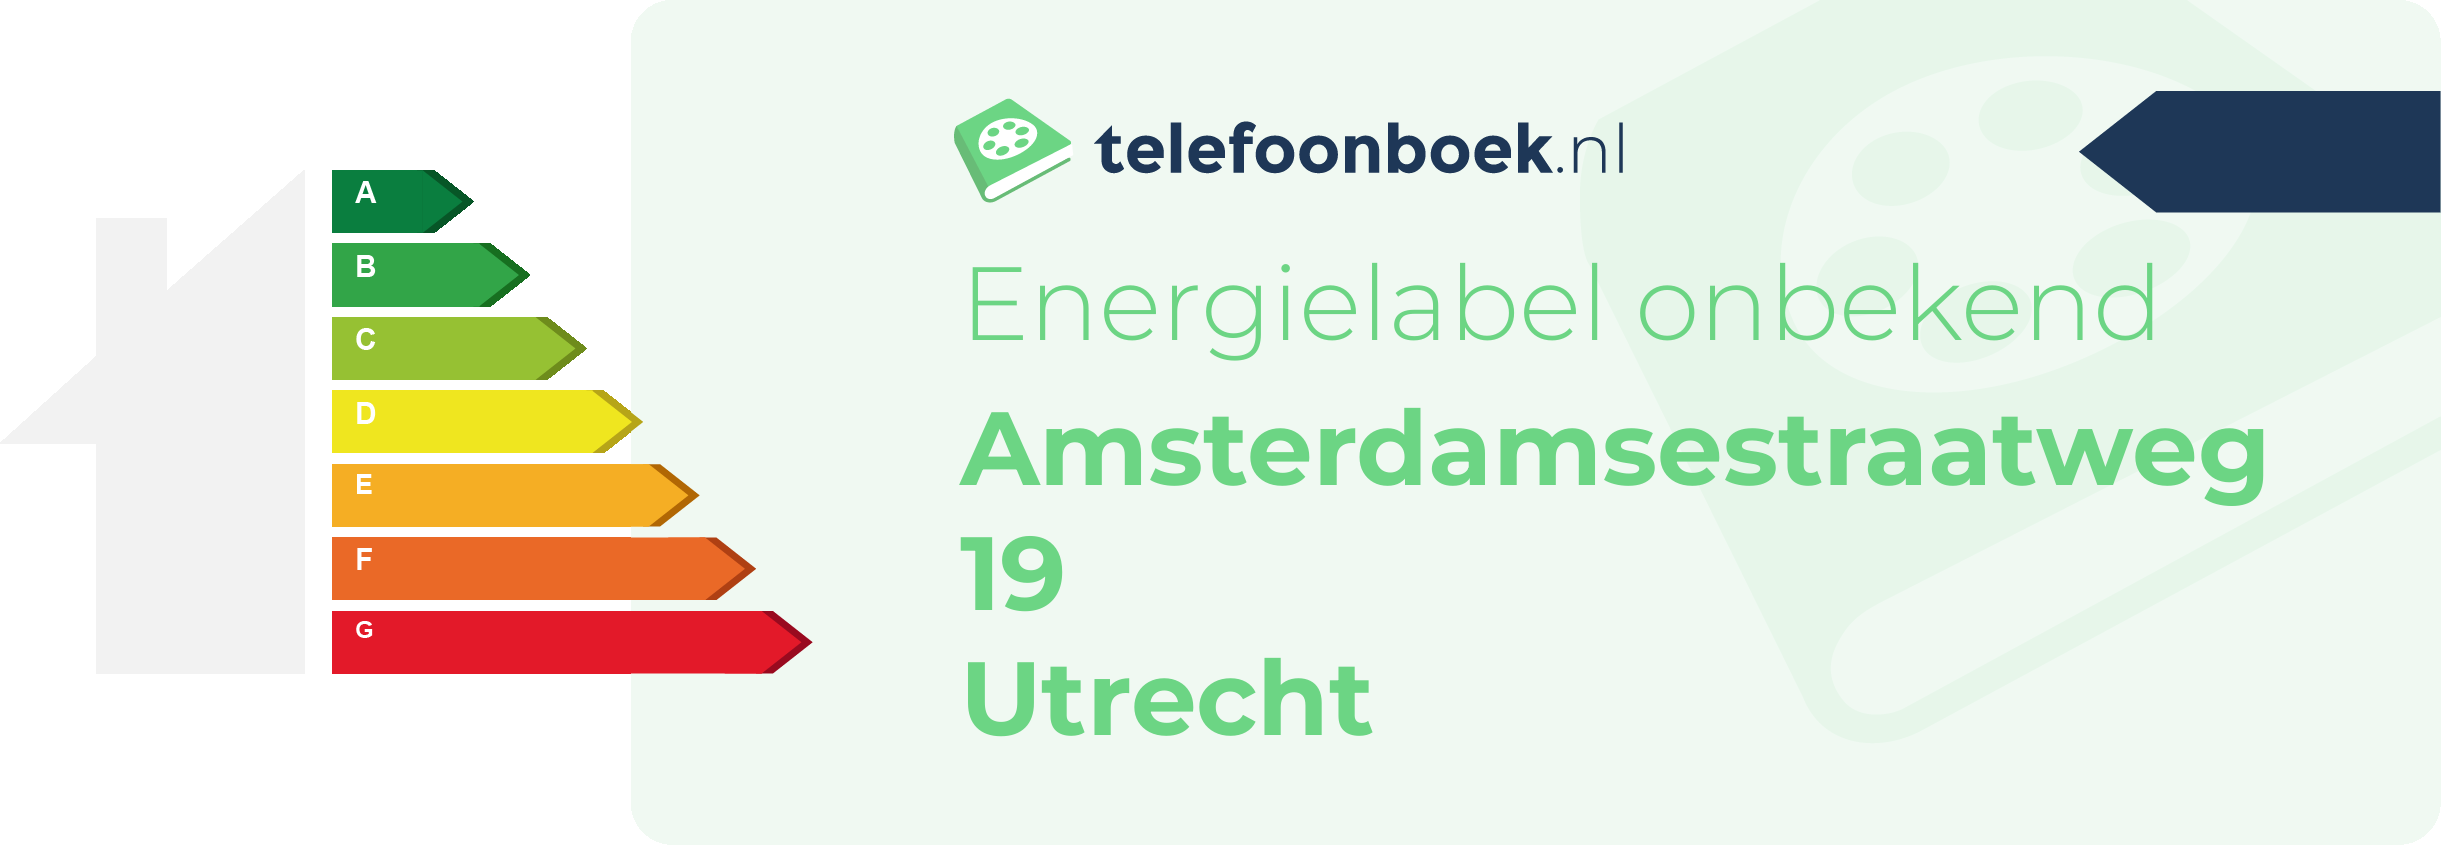 Energielabel Amsterdamsestraatweg 19 Utrecht